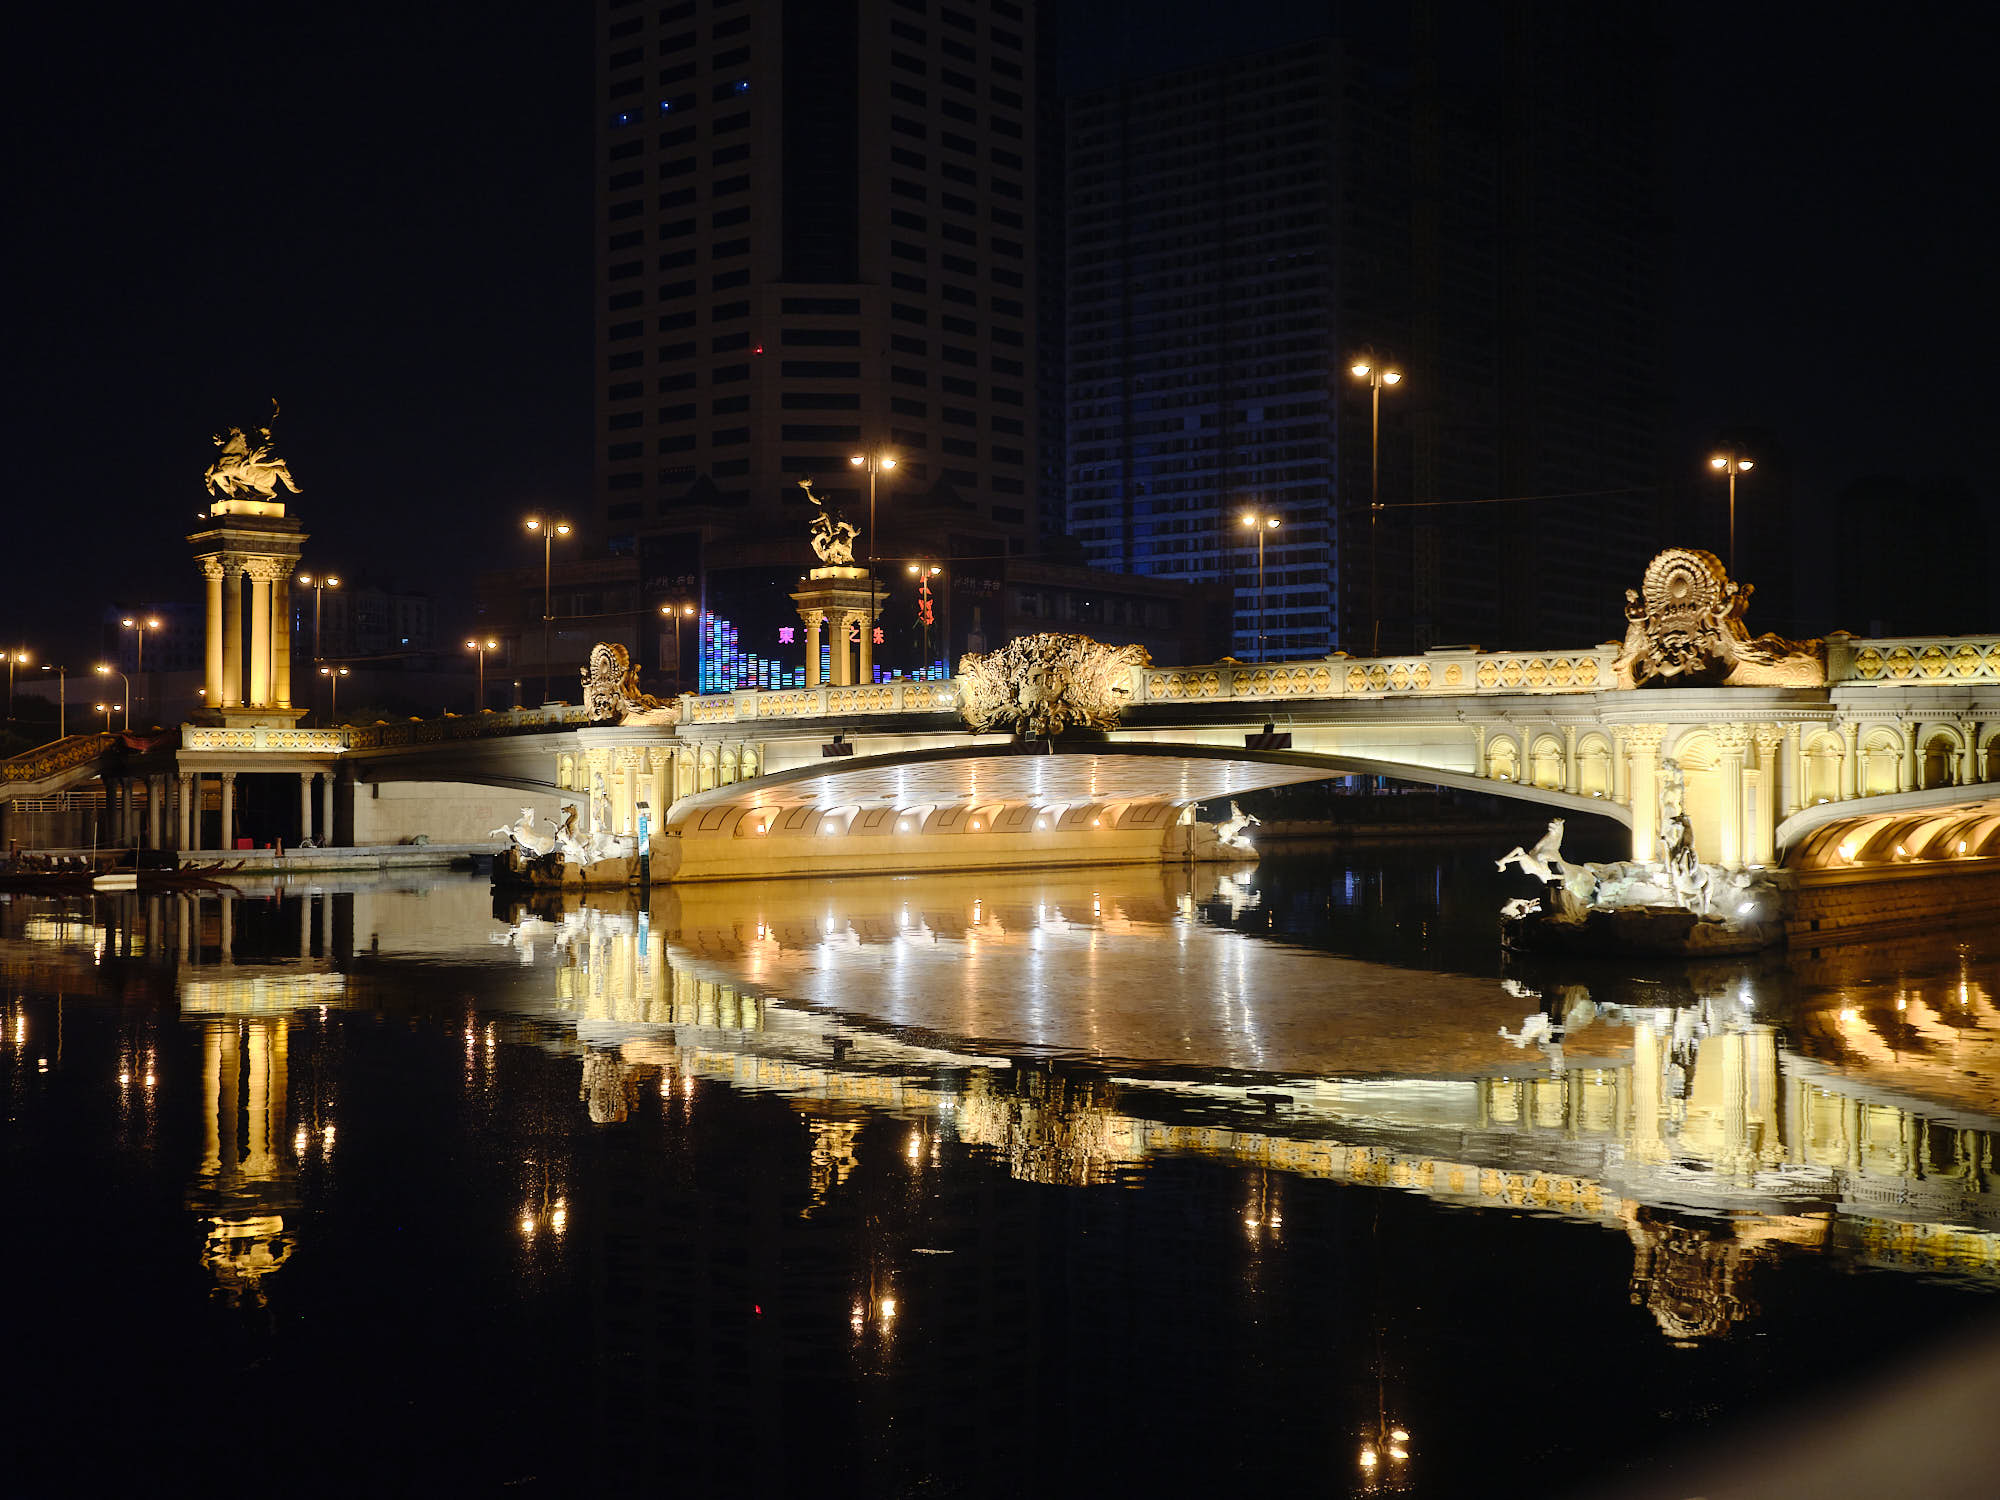 Lit bridge at night in Tianjin, China